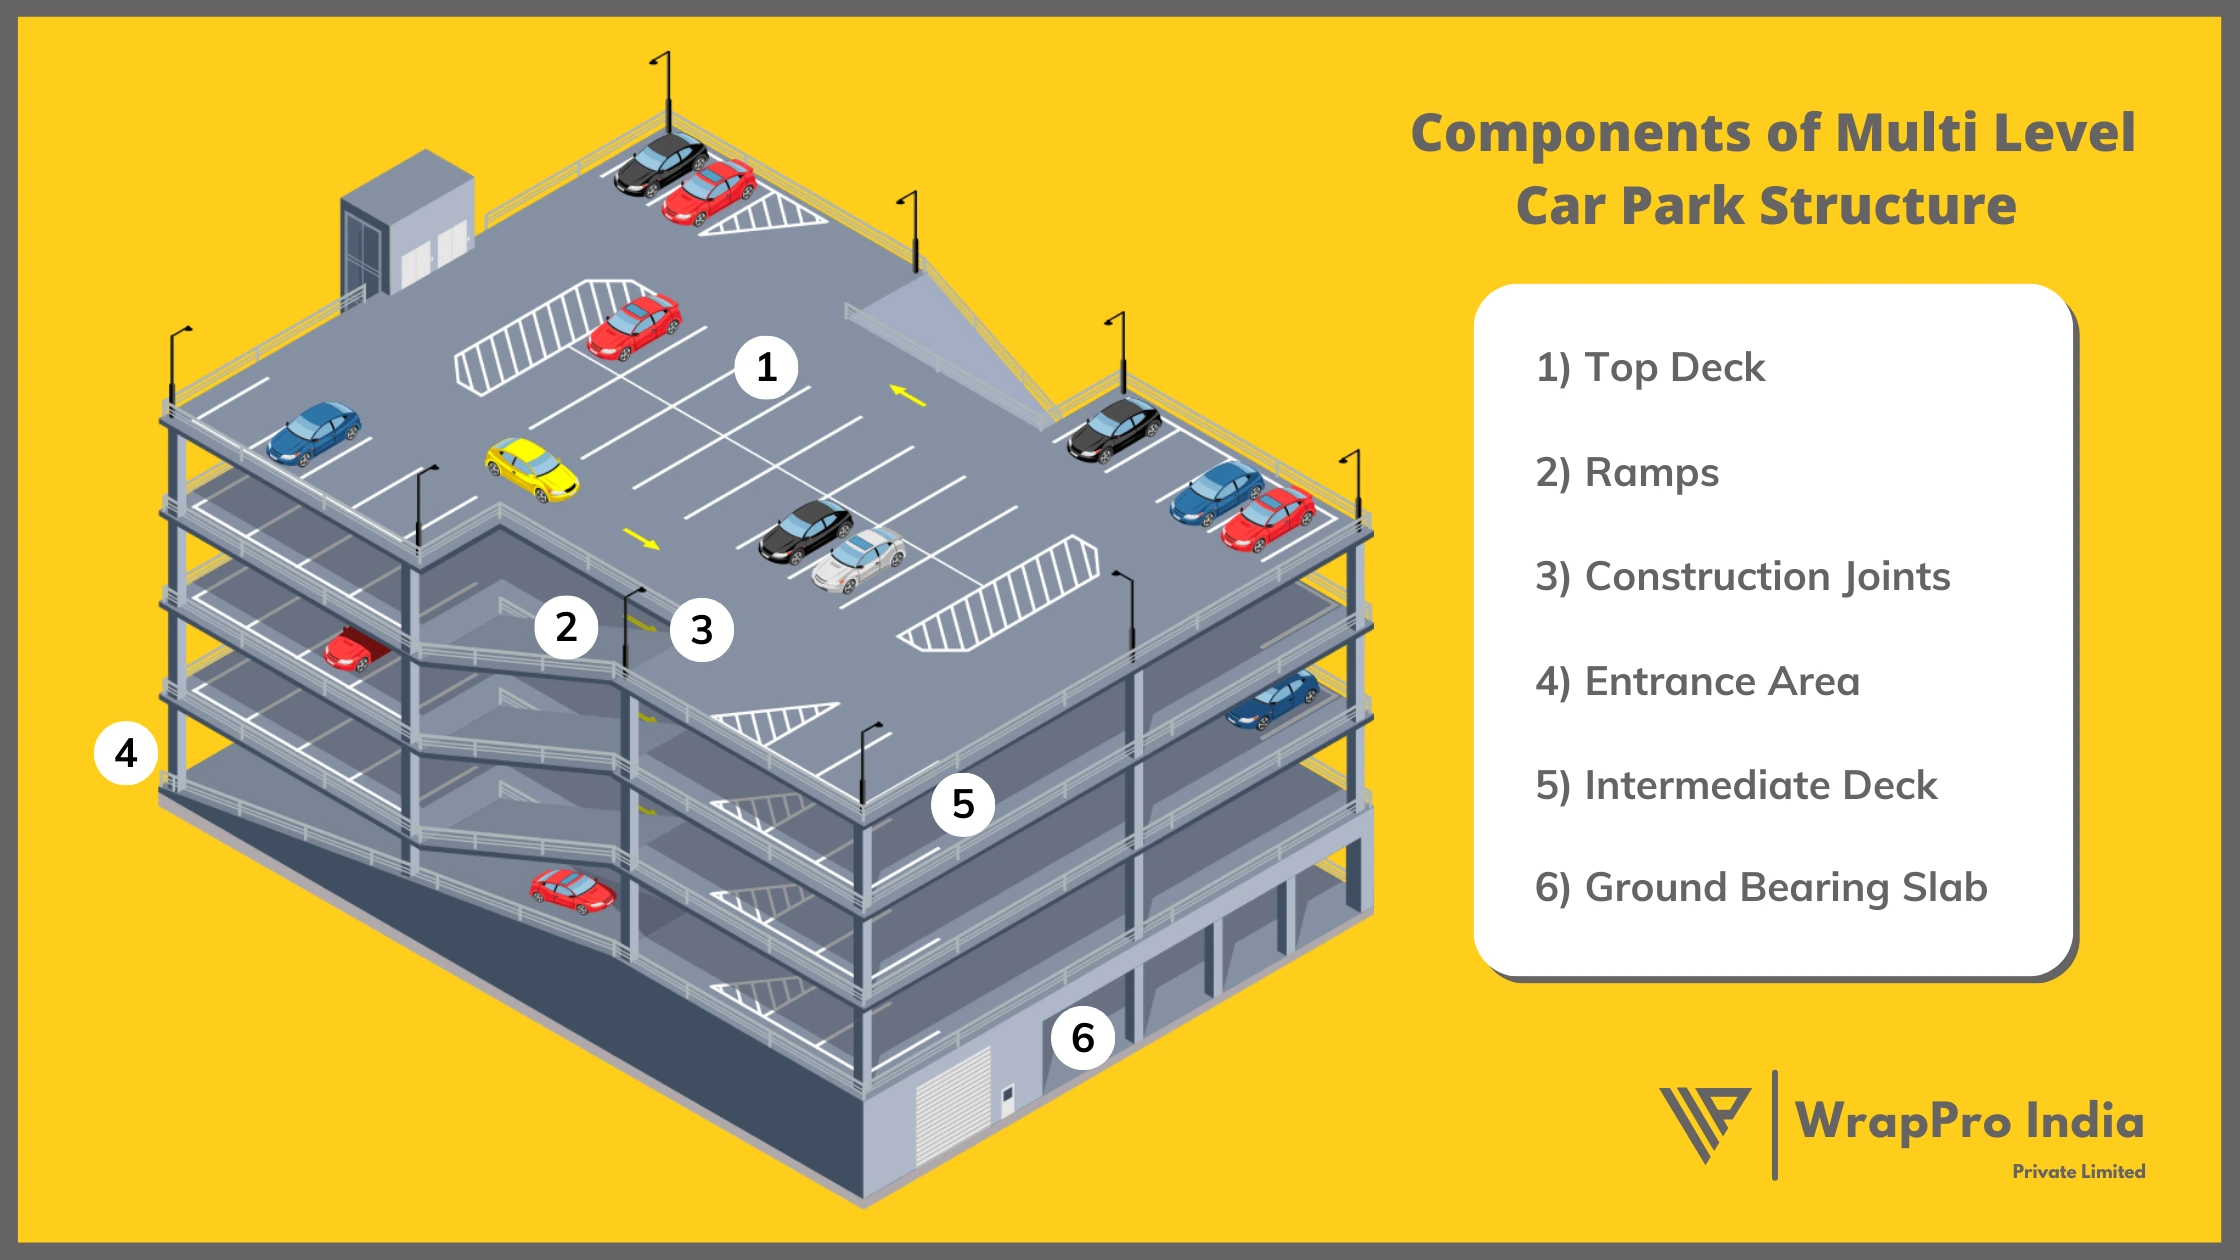 Critical Components of a Multilevel Car Park